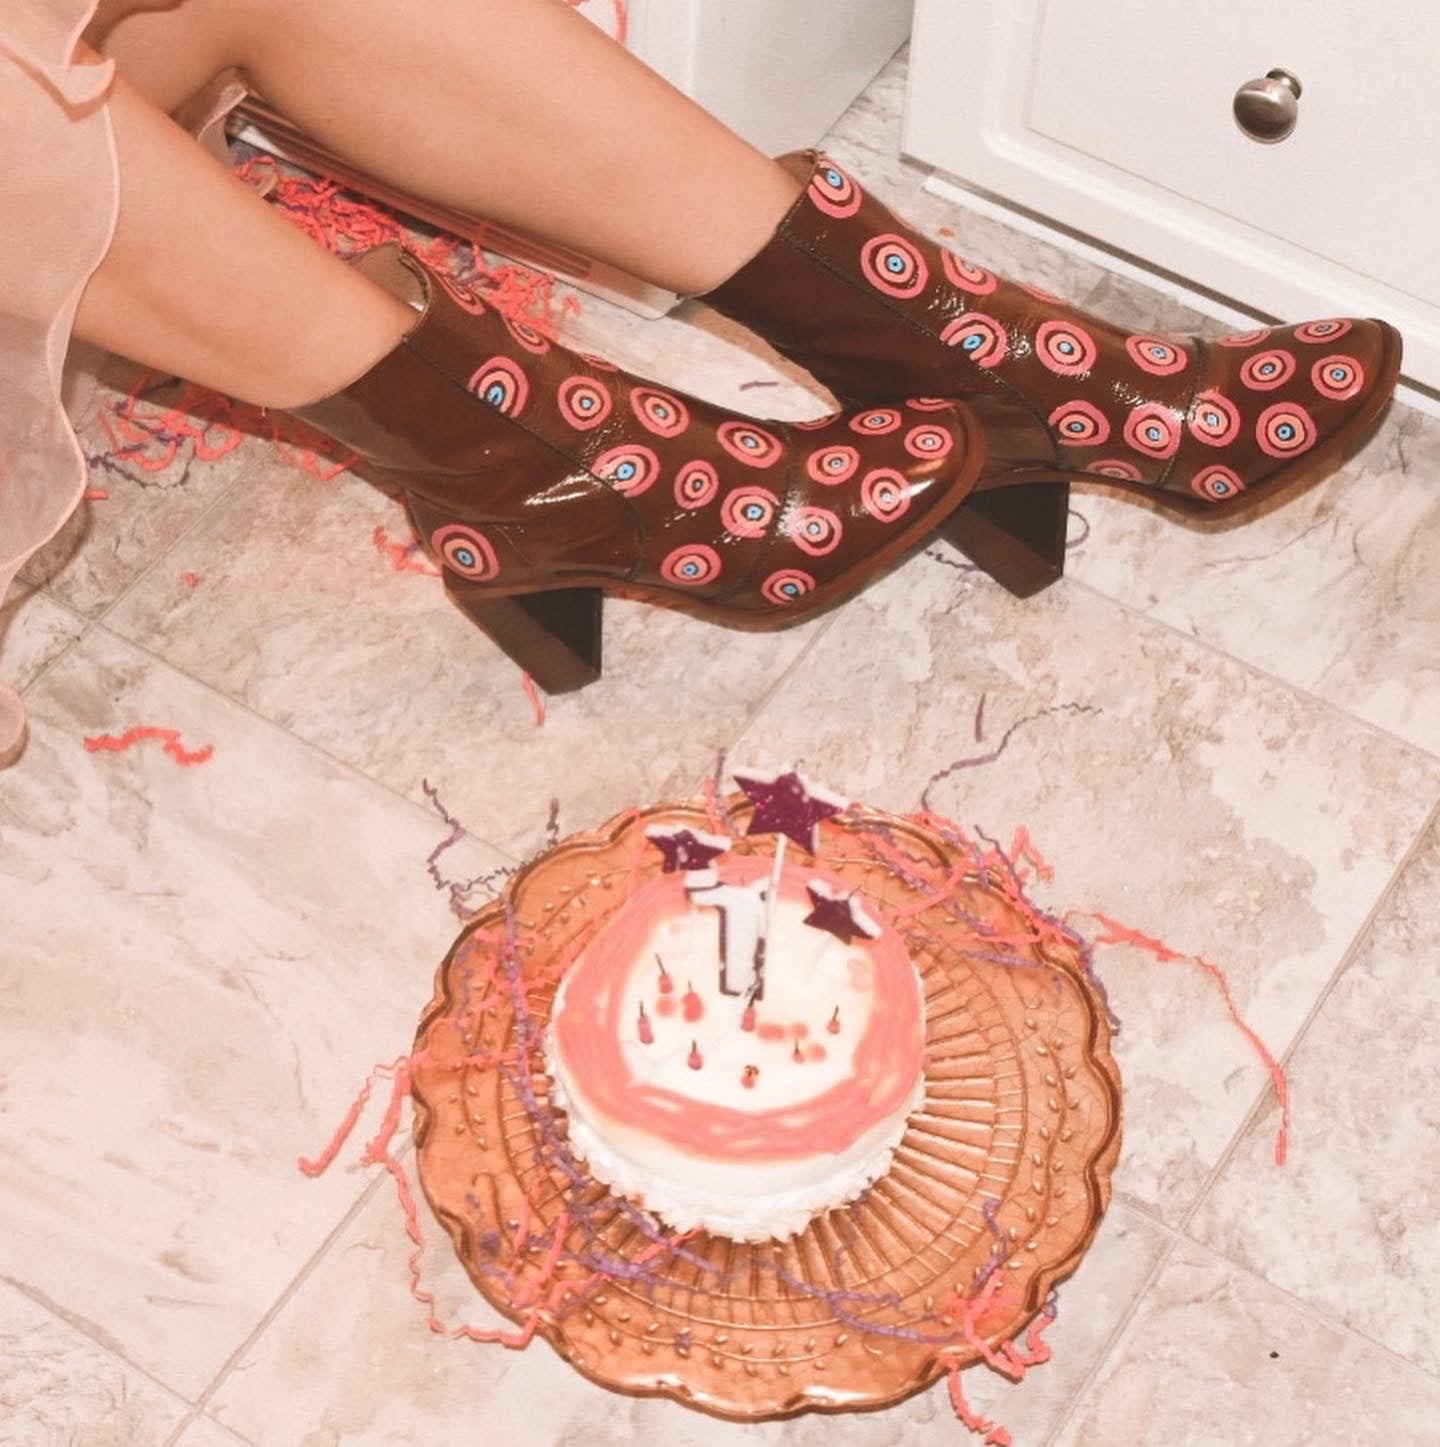 “Birthday Suit” boots